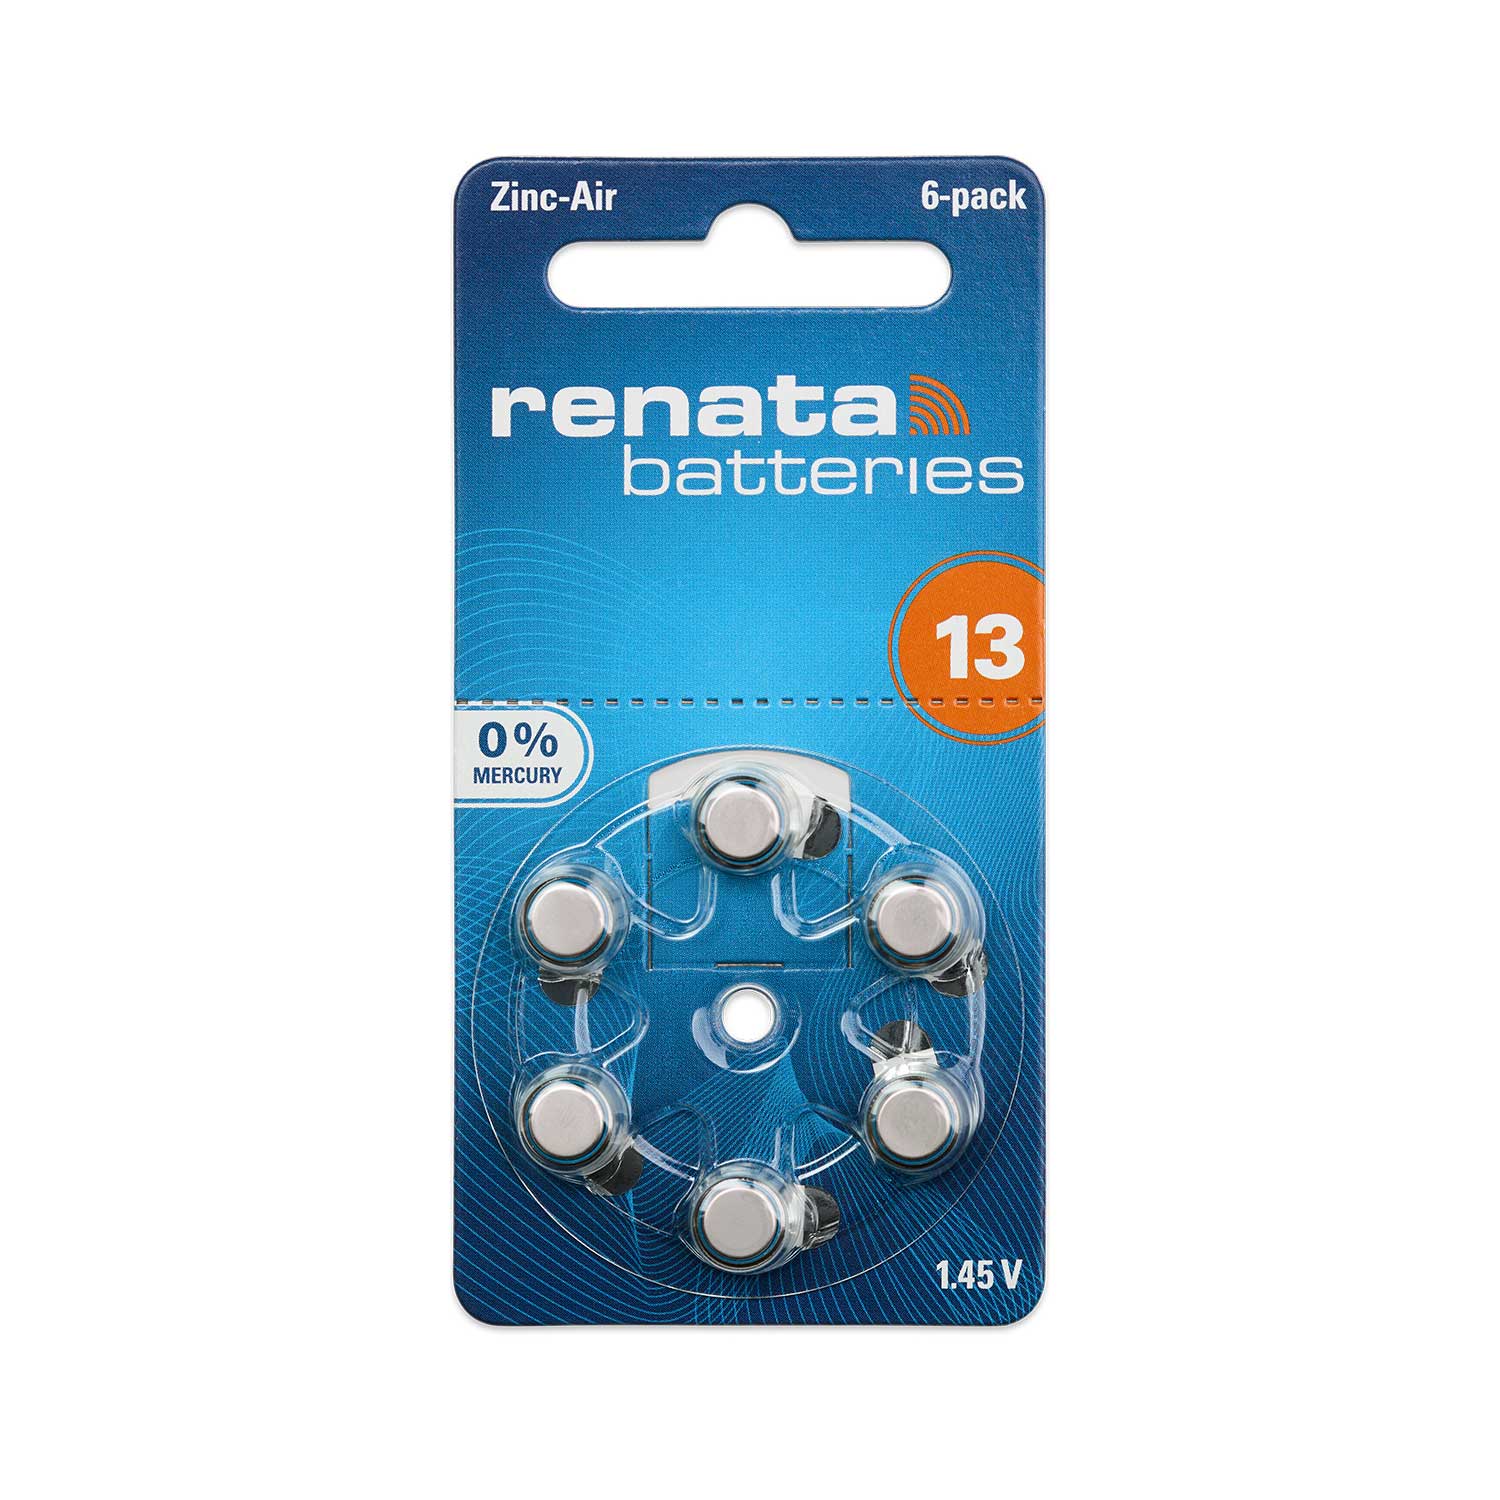 Renata 13 hearing aid button cell <br/>Brand: Renata / Manufacturer name: 13